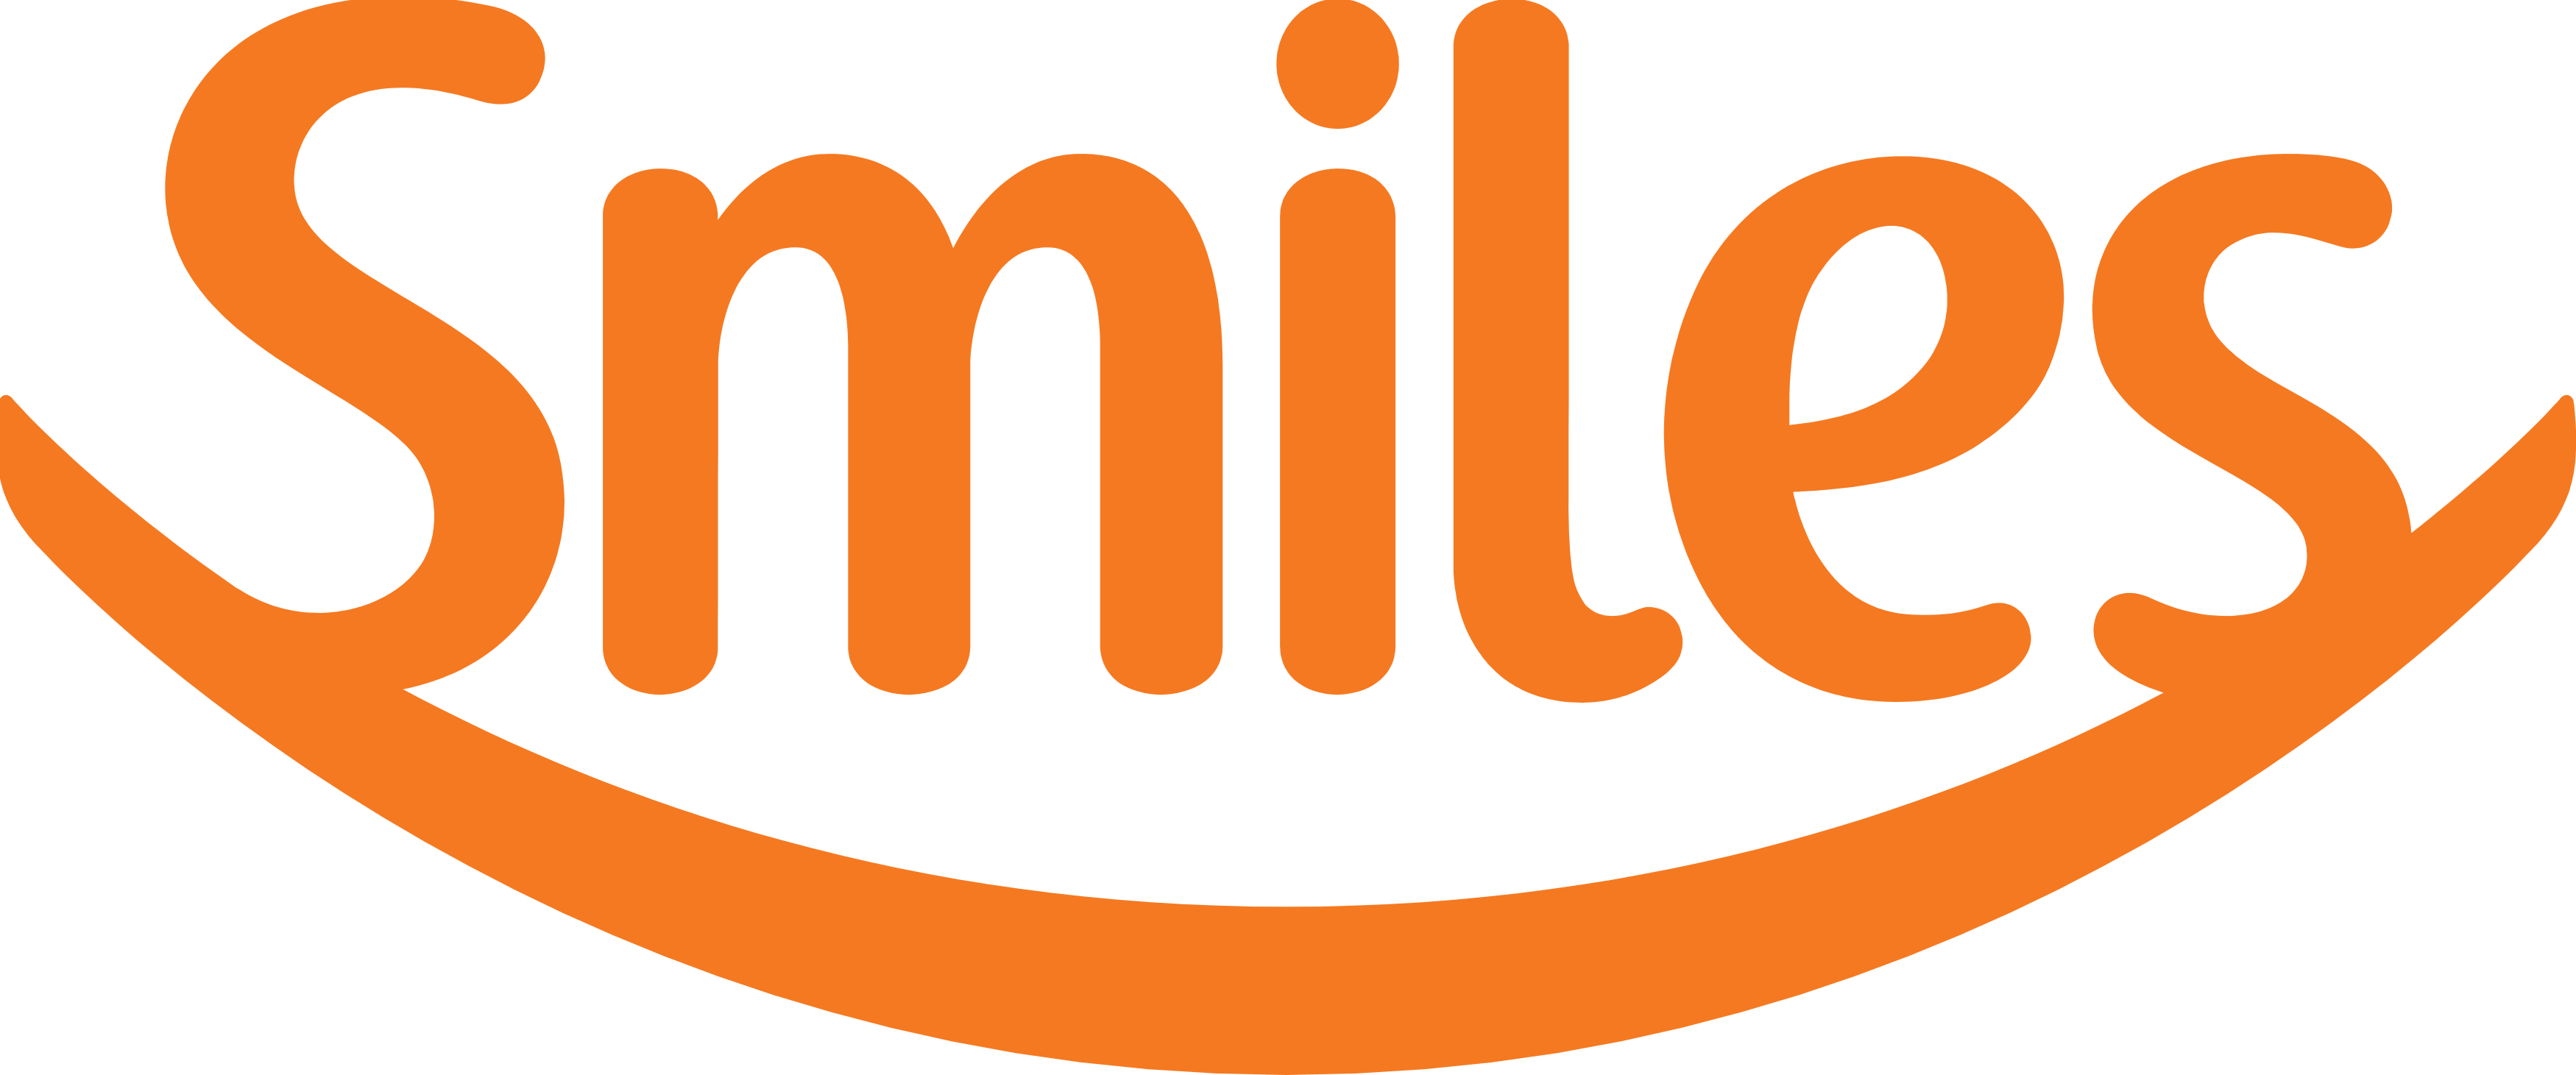 Smiles-logo 19 De Setembro De 2017 161 Kb 3500 × - Smiles Gol (3500x1461), Png Download